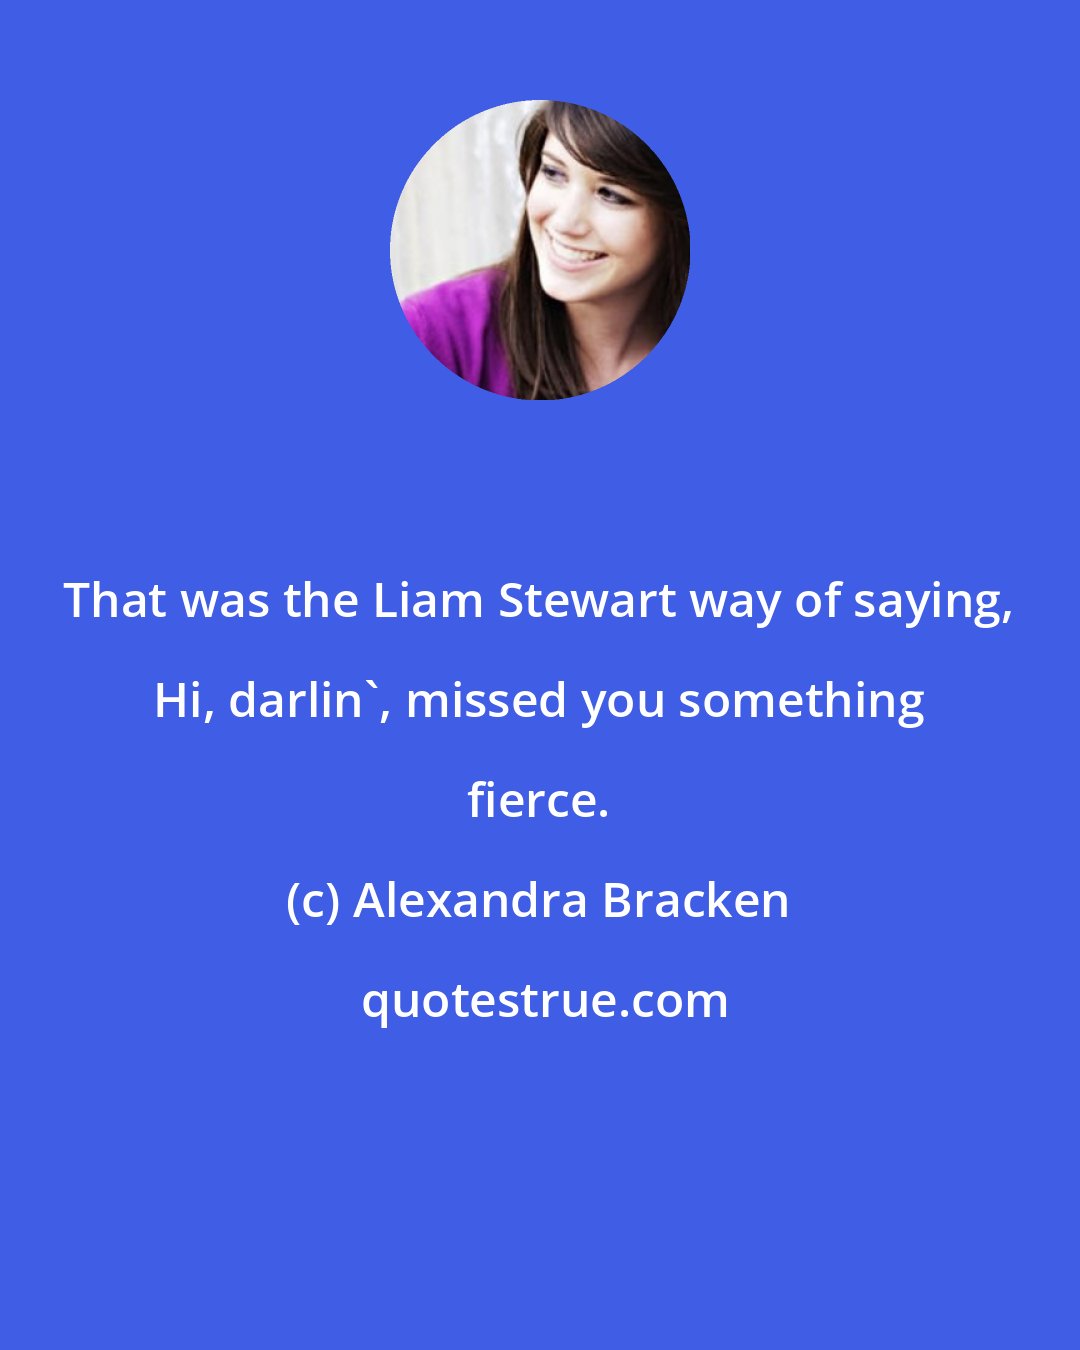 Alexandra Bracken: That was the Liam Stewart way of saying, Hi, darlin', missed you something fierce.